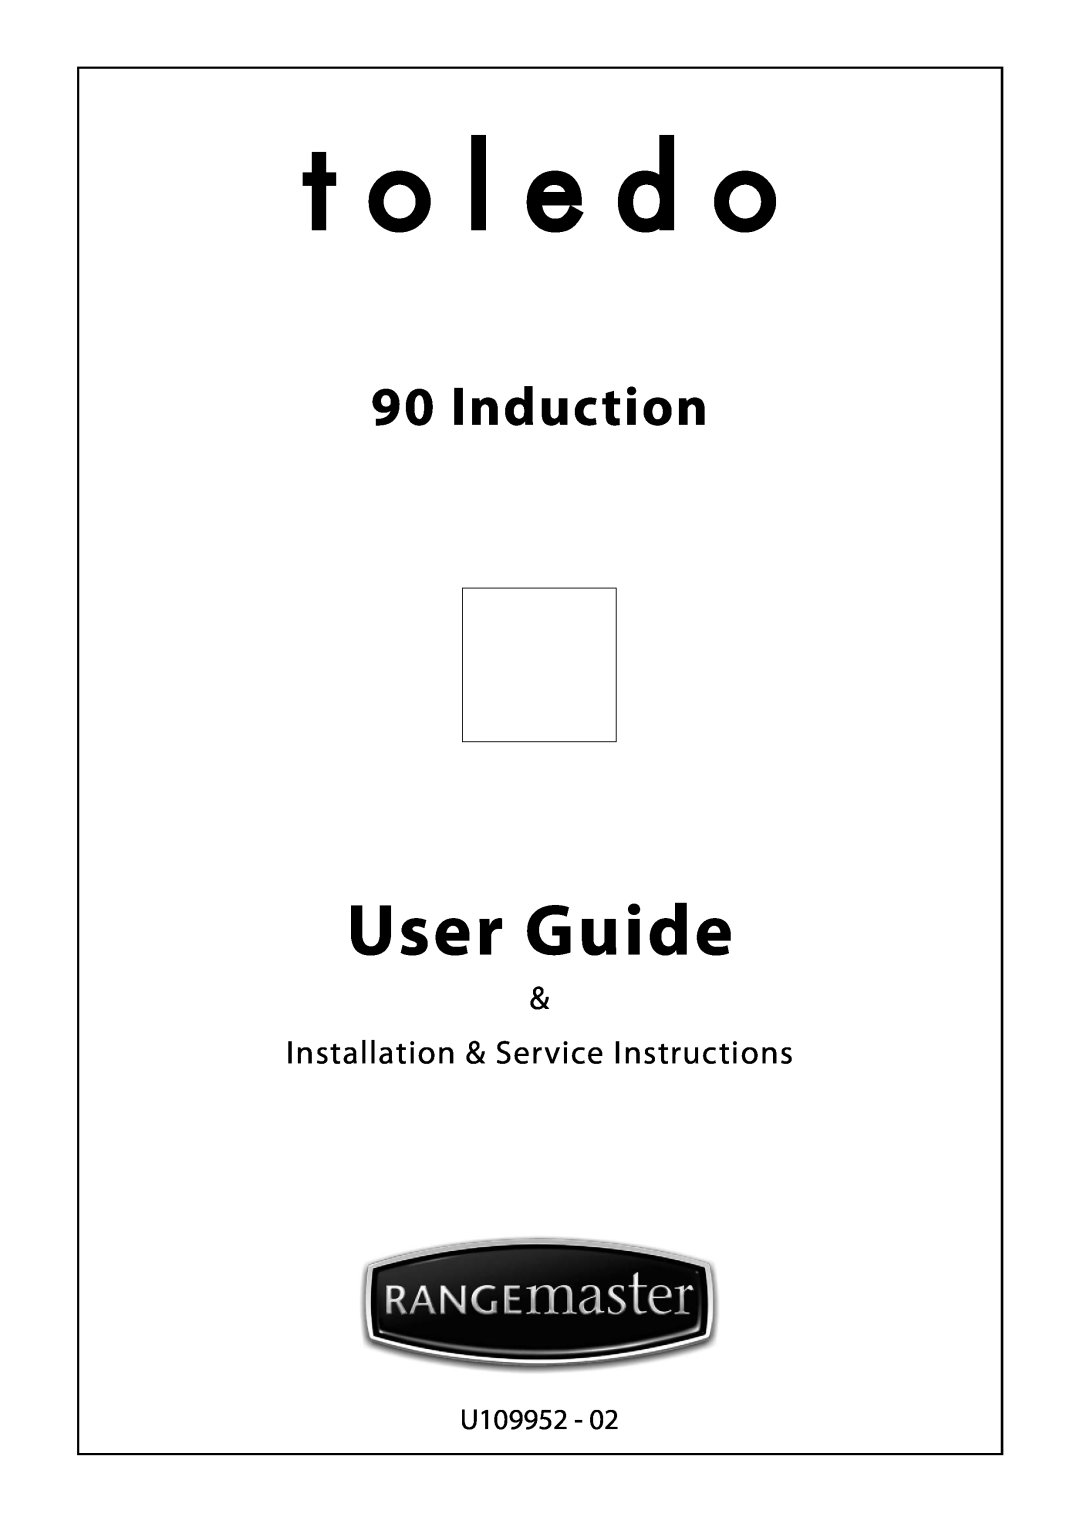 Rangemaster U109952 - 02 manual User Guide, Induction, Installation & Service Instructions, ArtNo.000-0021 Toledo logo 